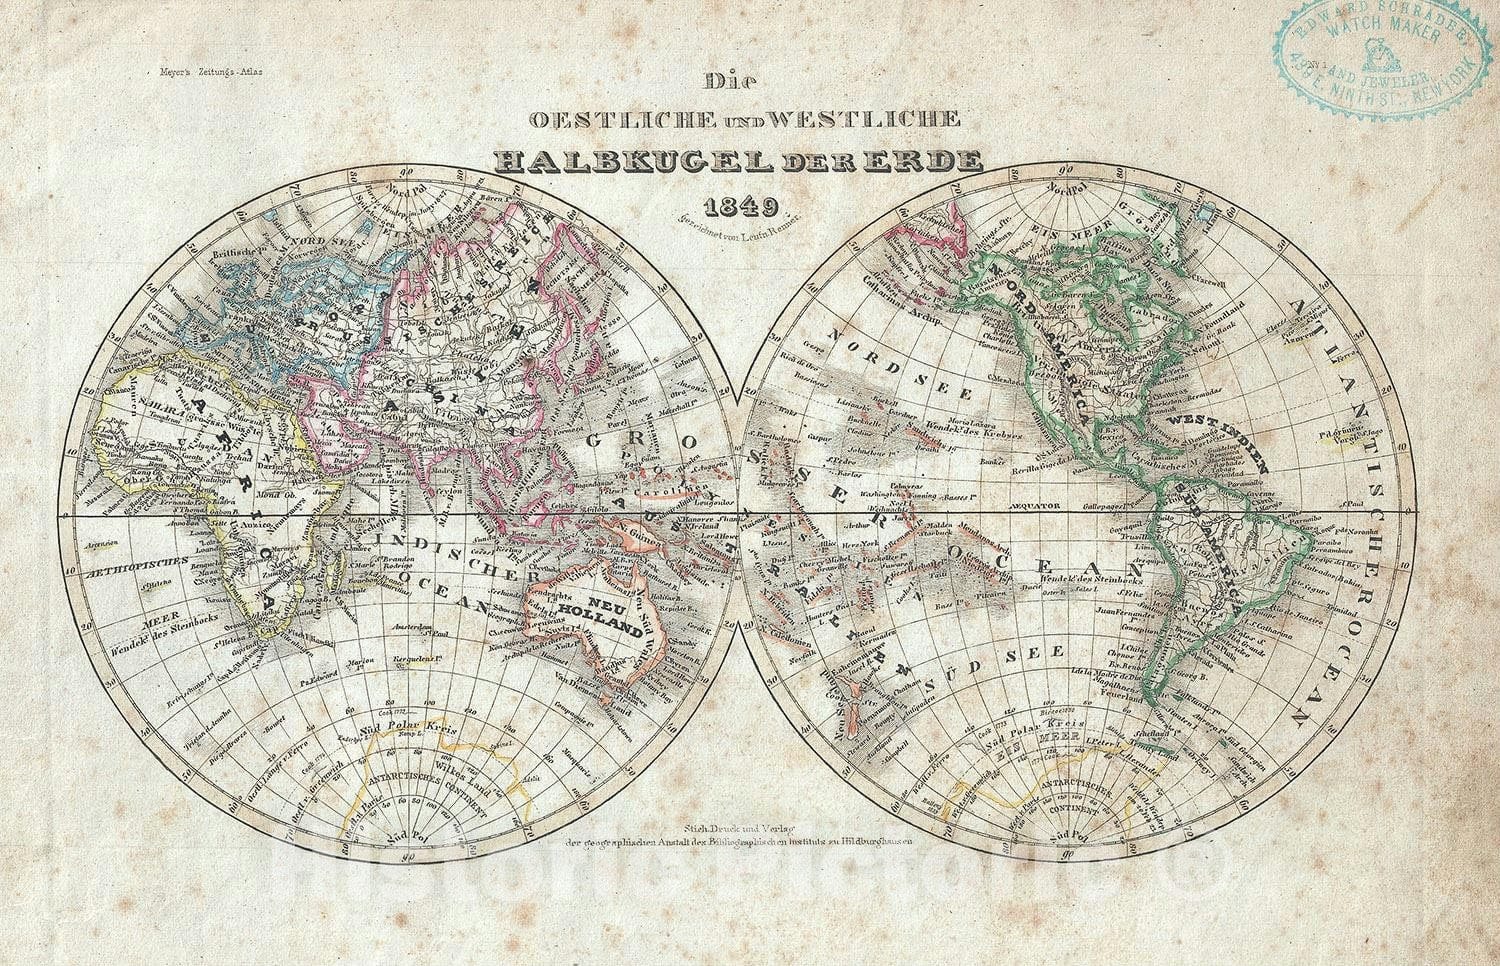 Historic Map : The World in Hemispheres, Meyer, 1849, Vintage Wall Art